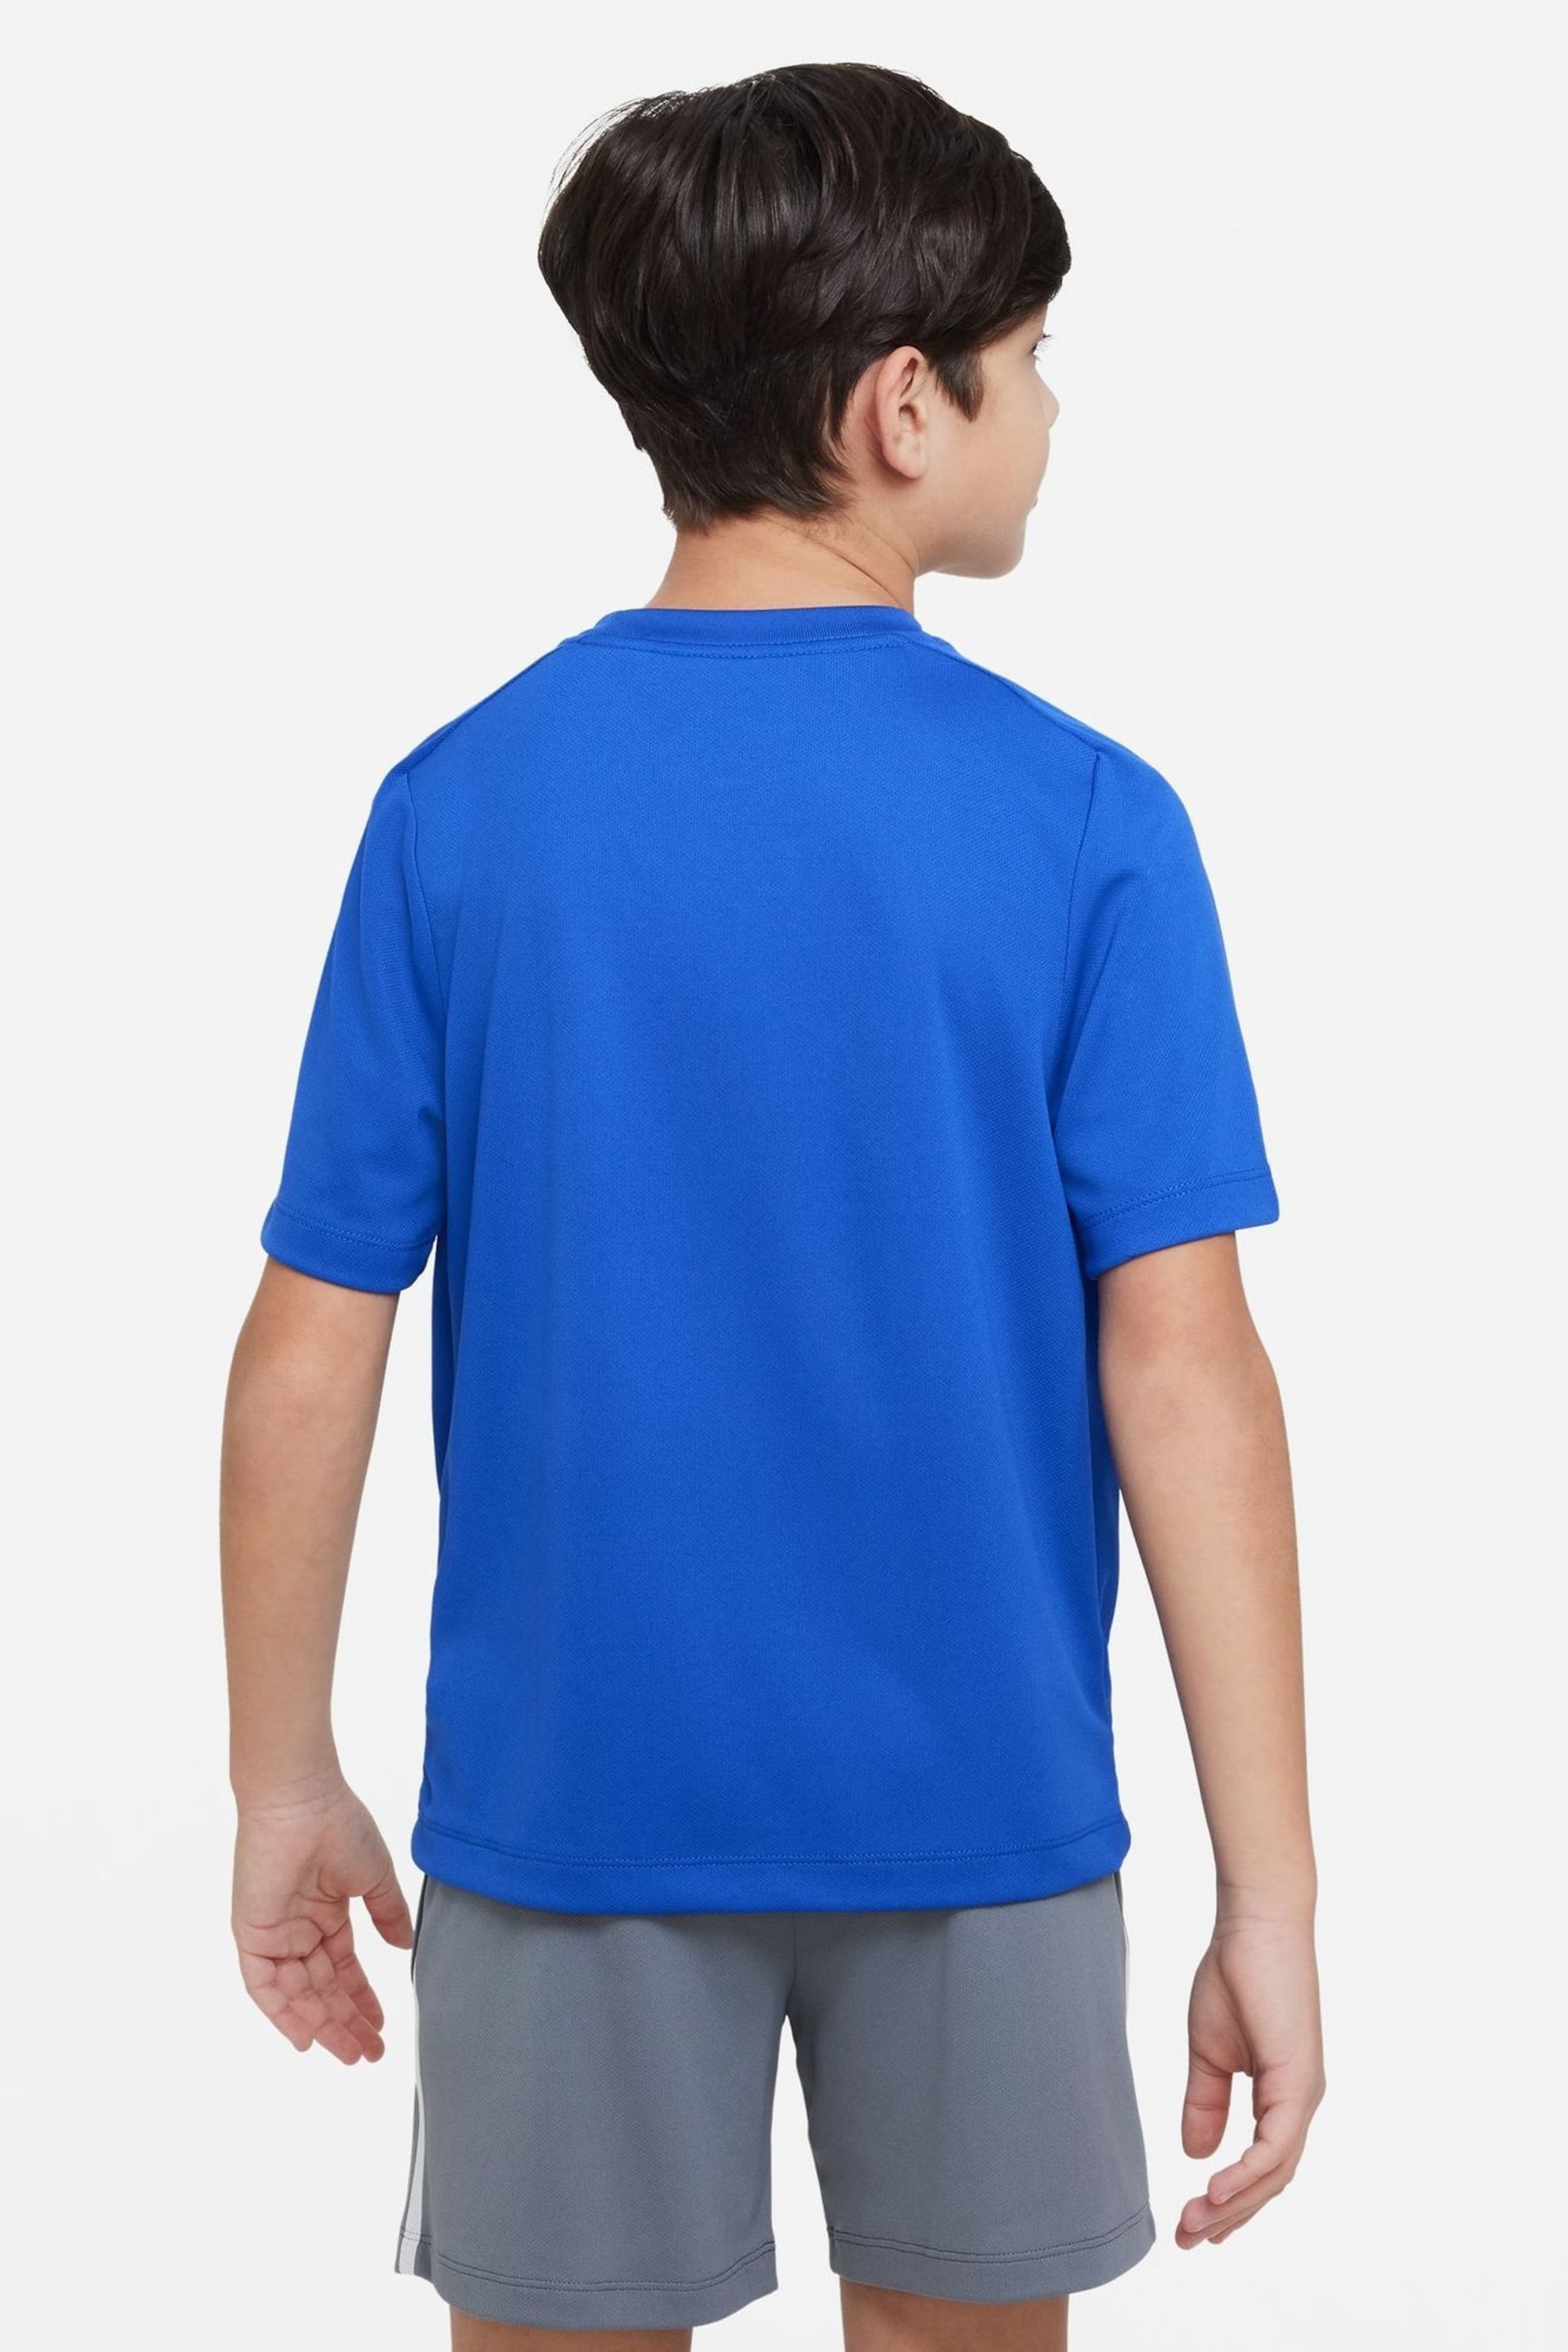 Nike Blue Dri-FIT Multi Graphic Training T-Shirt - Image 2 of 4